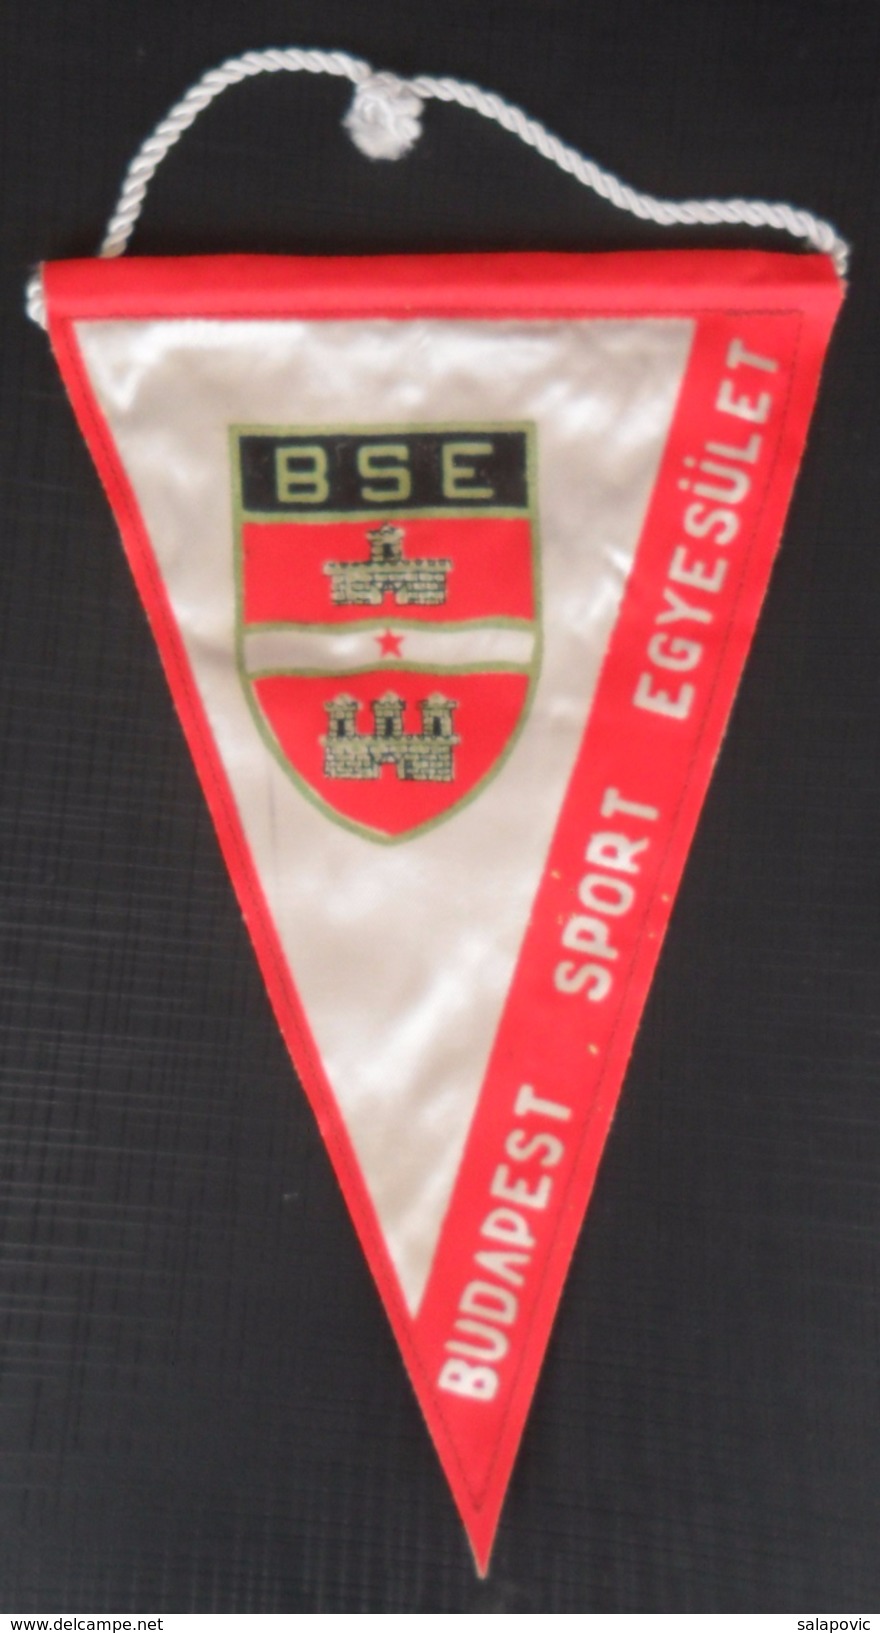 Budapest Sport Egyesület BSE Hungary FOOTBALL CLUB, SOCCER / FUTBOL / CALCIO, OLD PENNANT, SPORTS FLAG - Habillement, Souvenirs & Autres